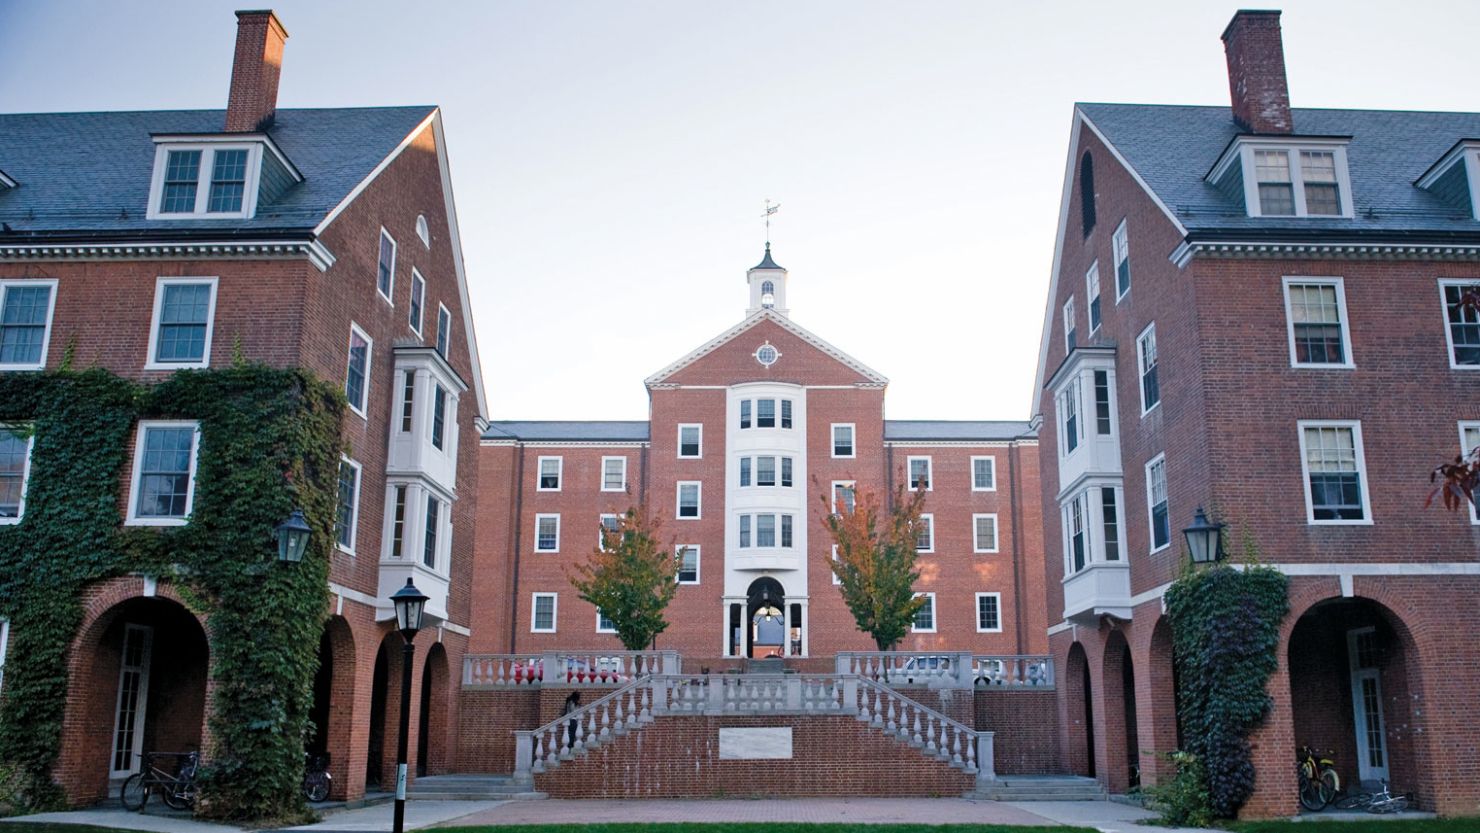 Smith College in Northampton, Massachusetts, has about 2,500 undergraduates.